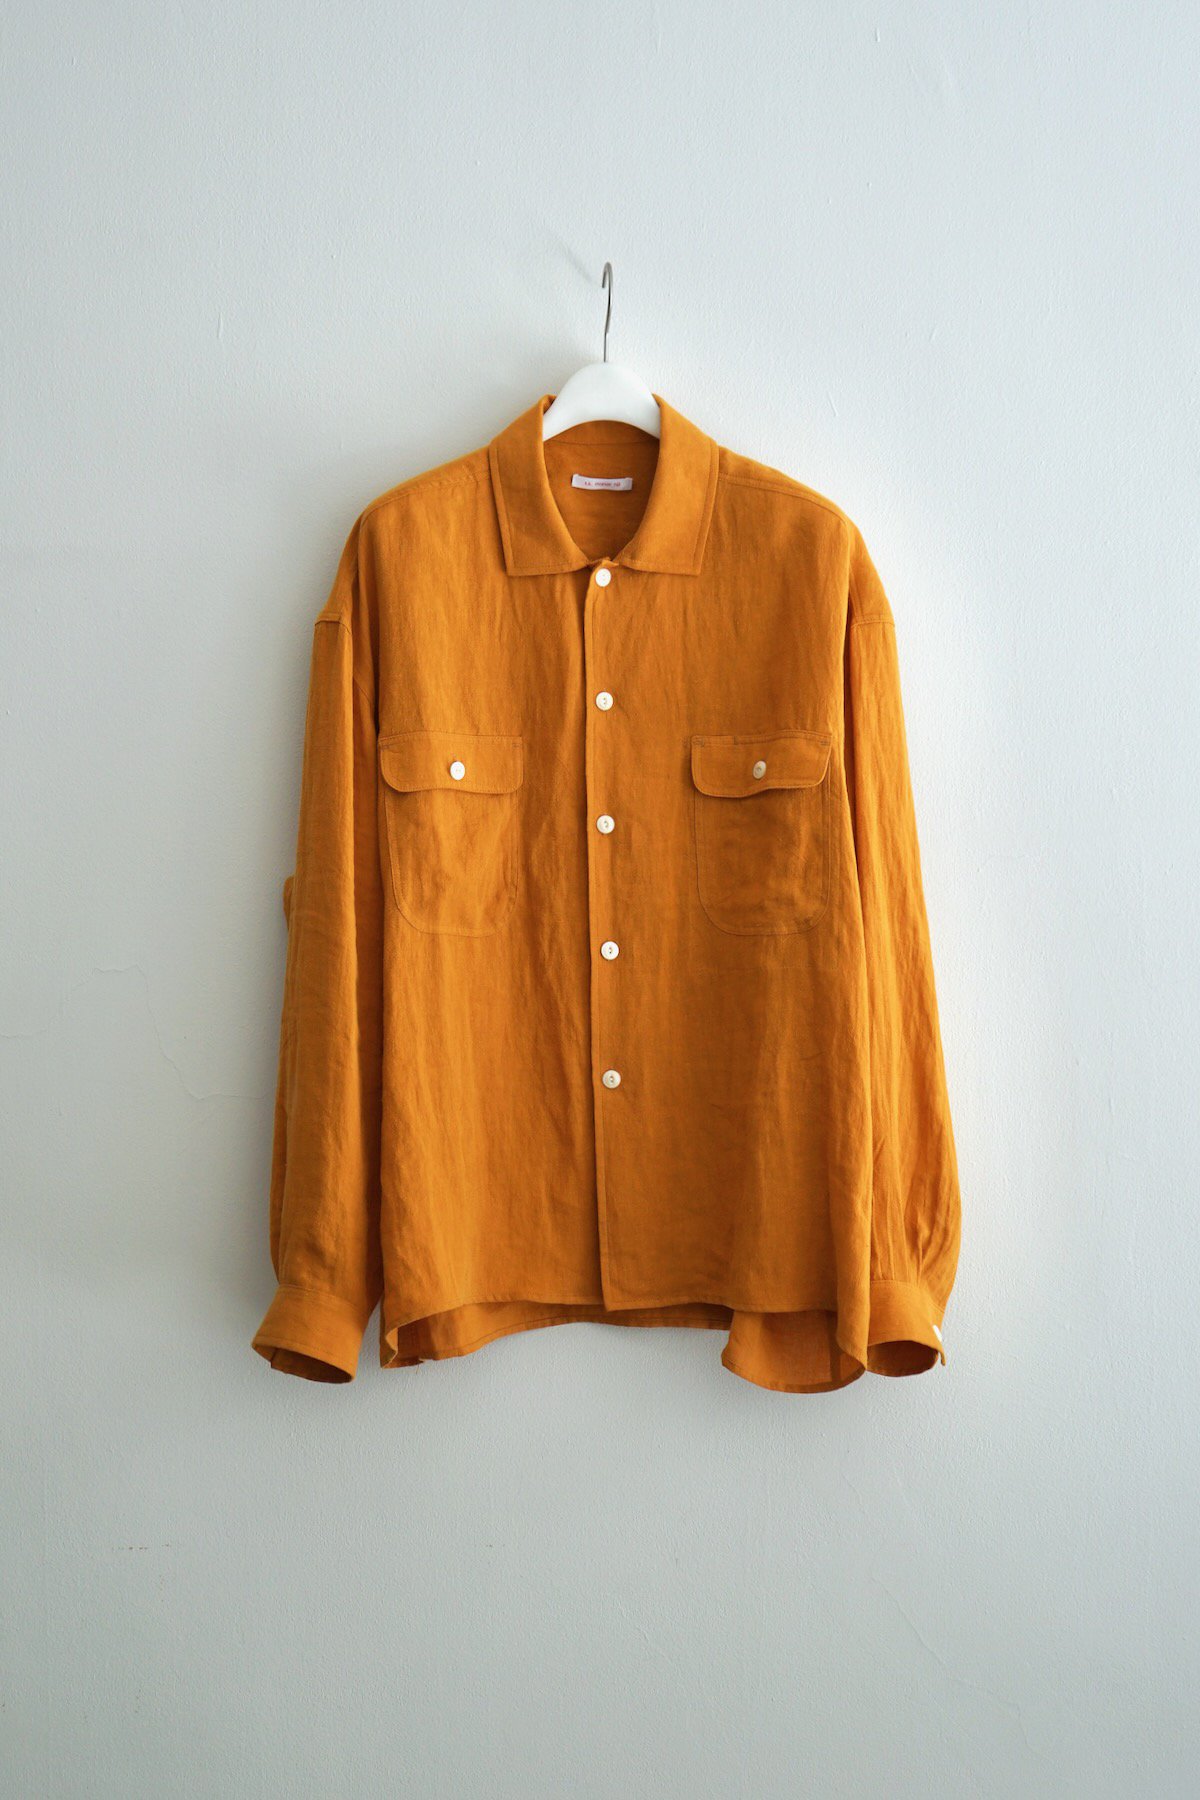 s.k. manor hill / Park Shirt Jacket / Burnt Orange Linen